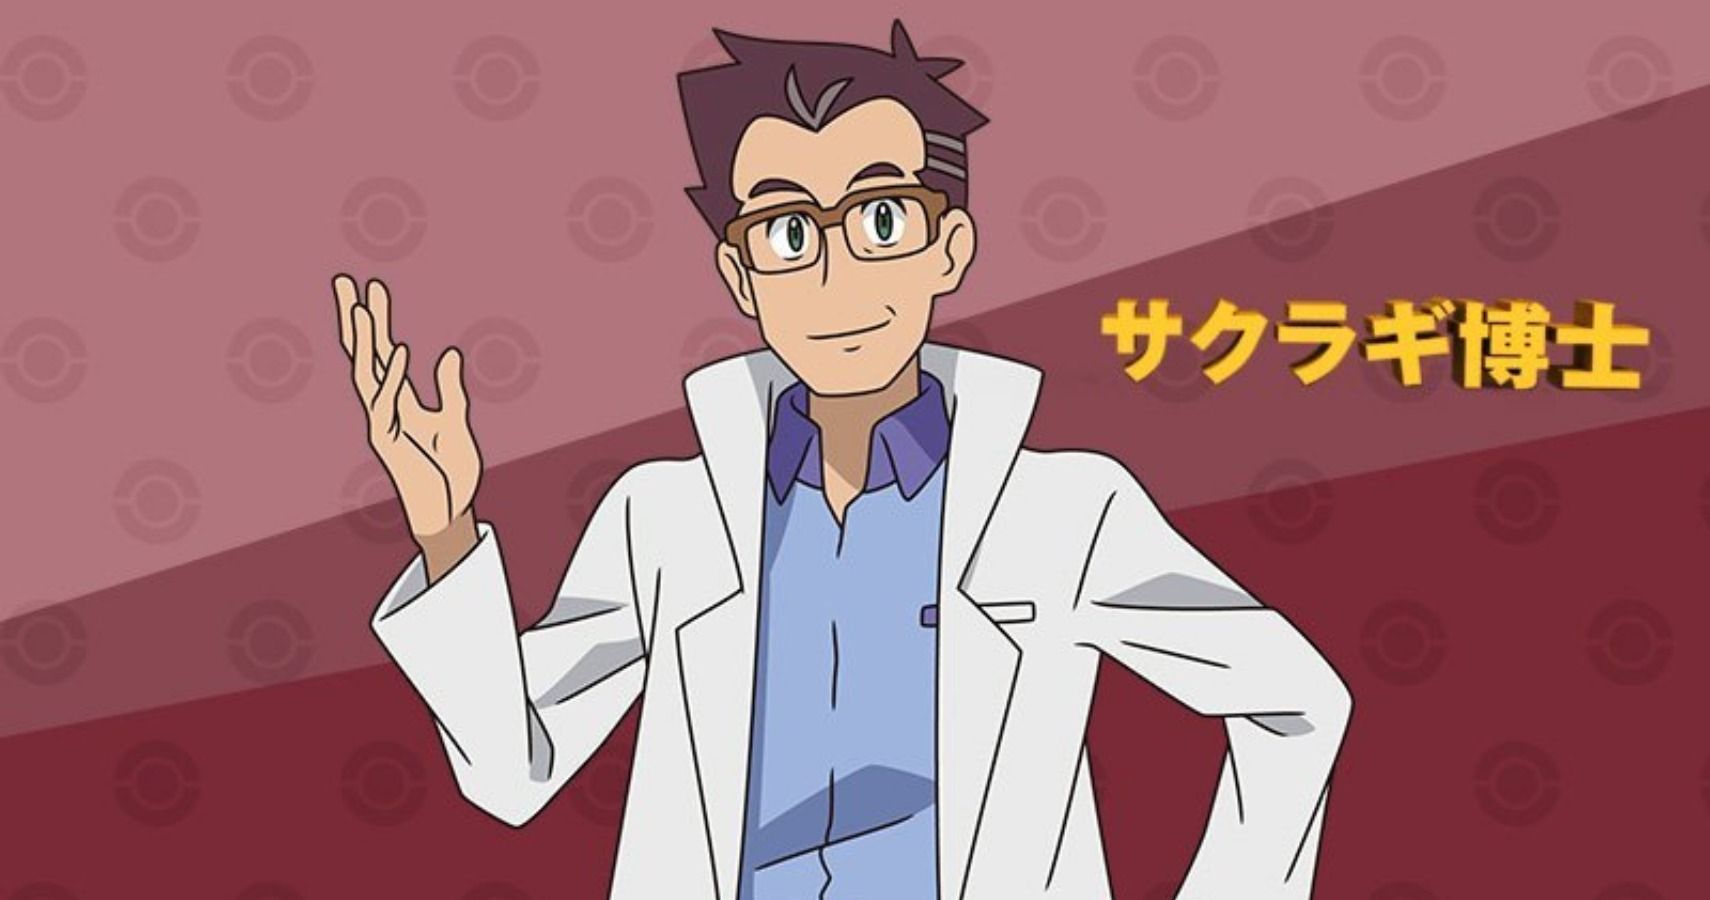 Proffesor Sakuragi Pokemon Cover